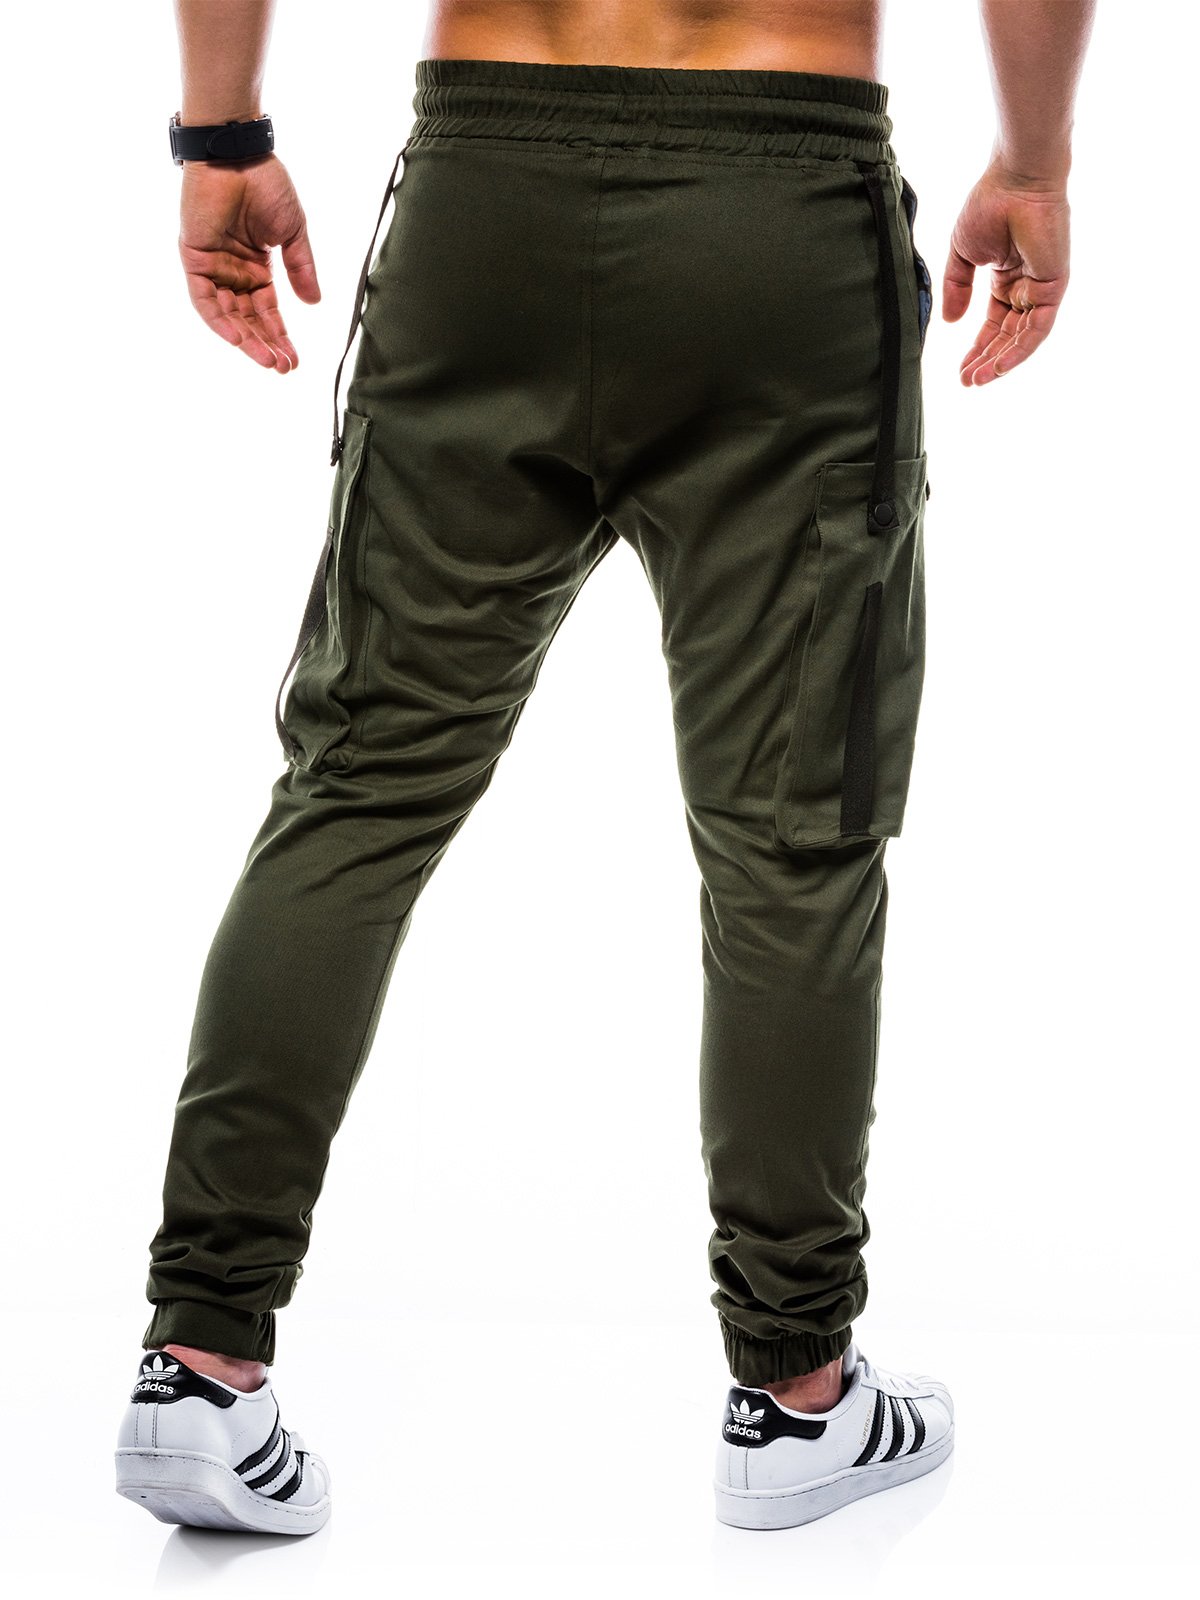 Men's pants joggers P671 - khaki | MODONE wholesale - Clothing For Men